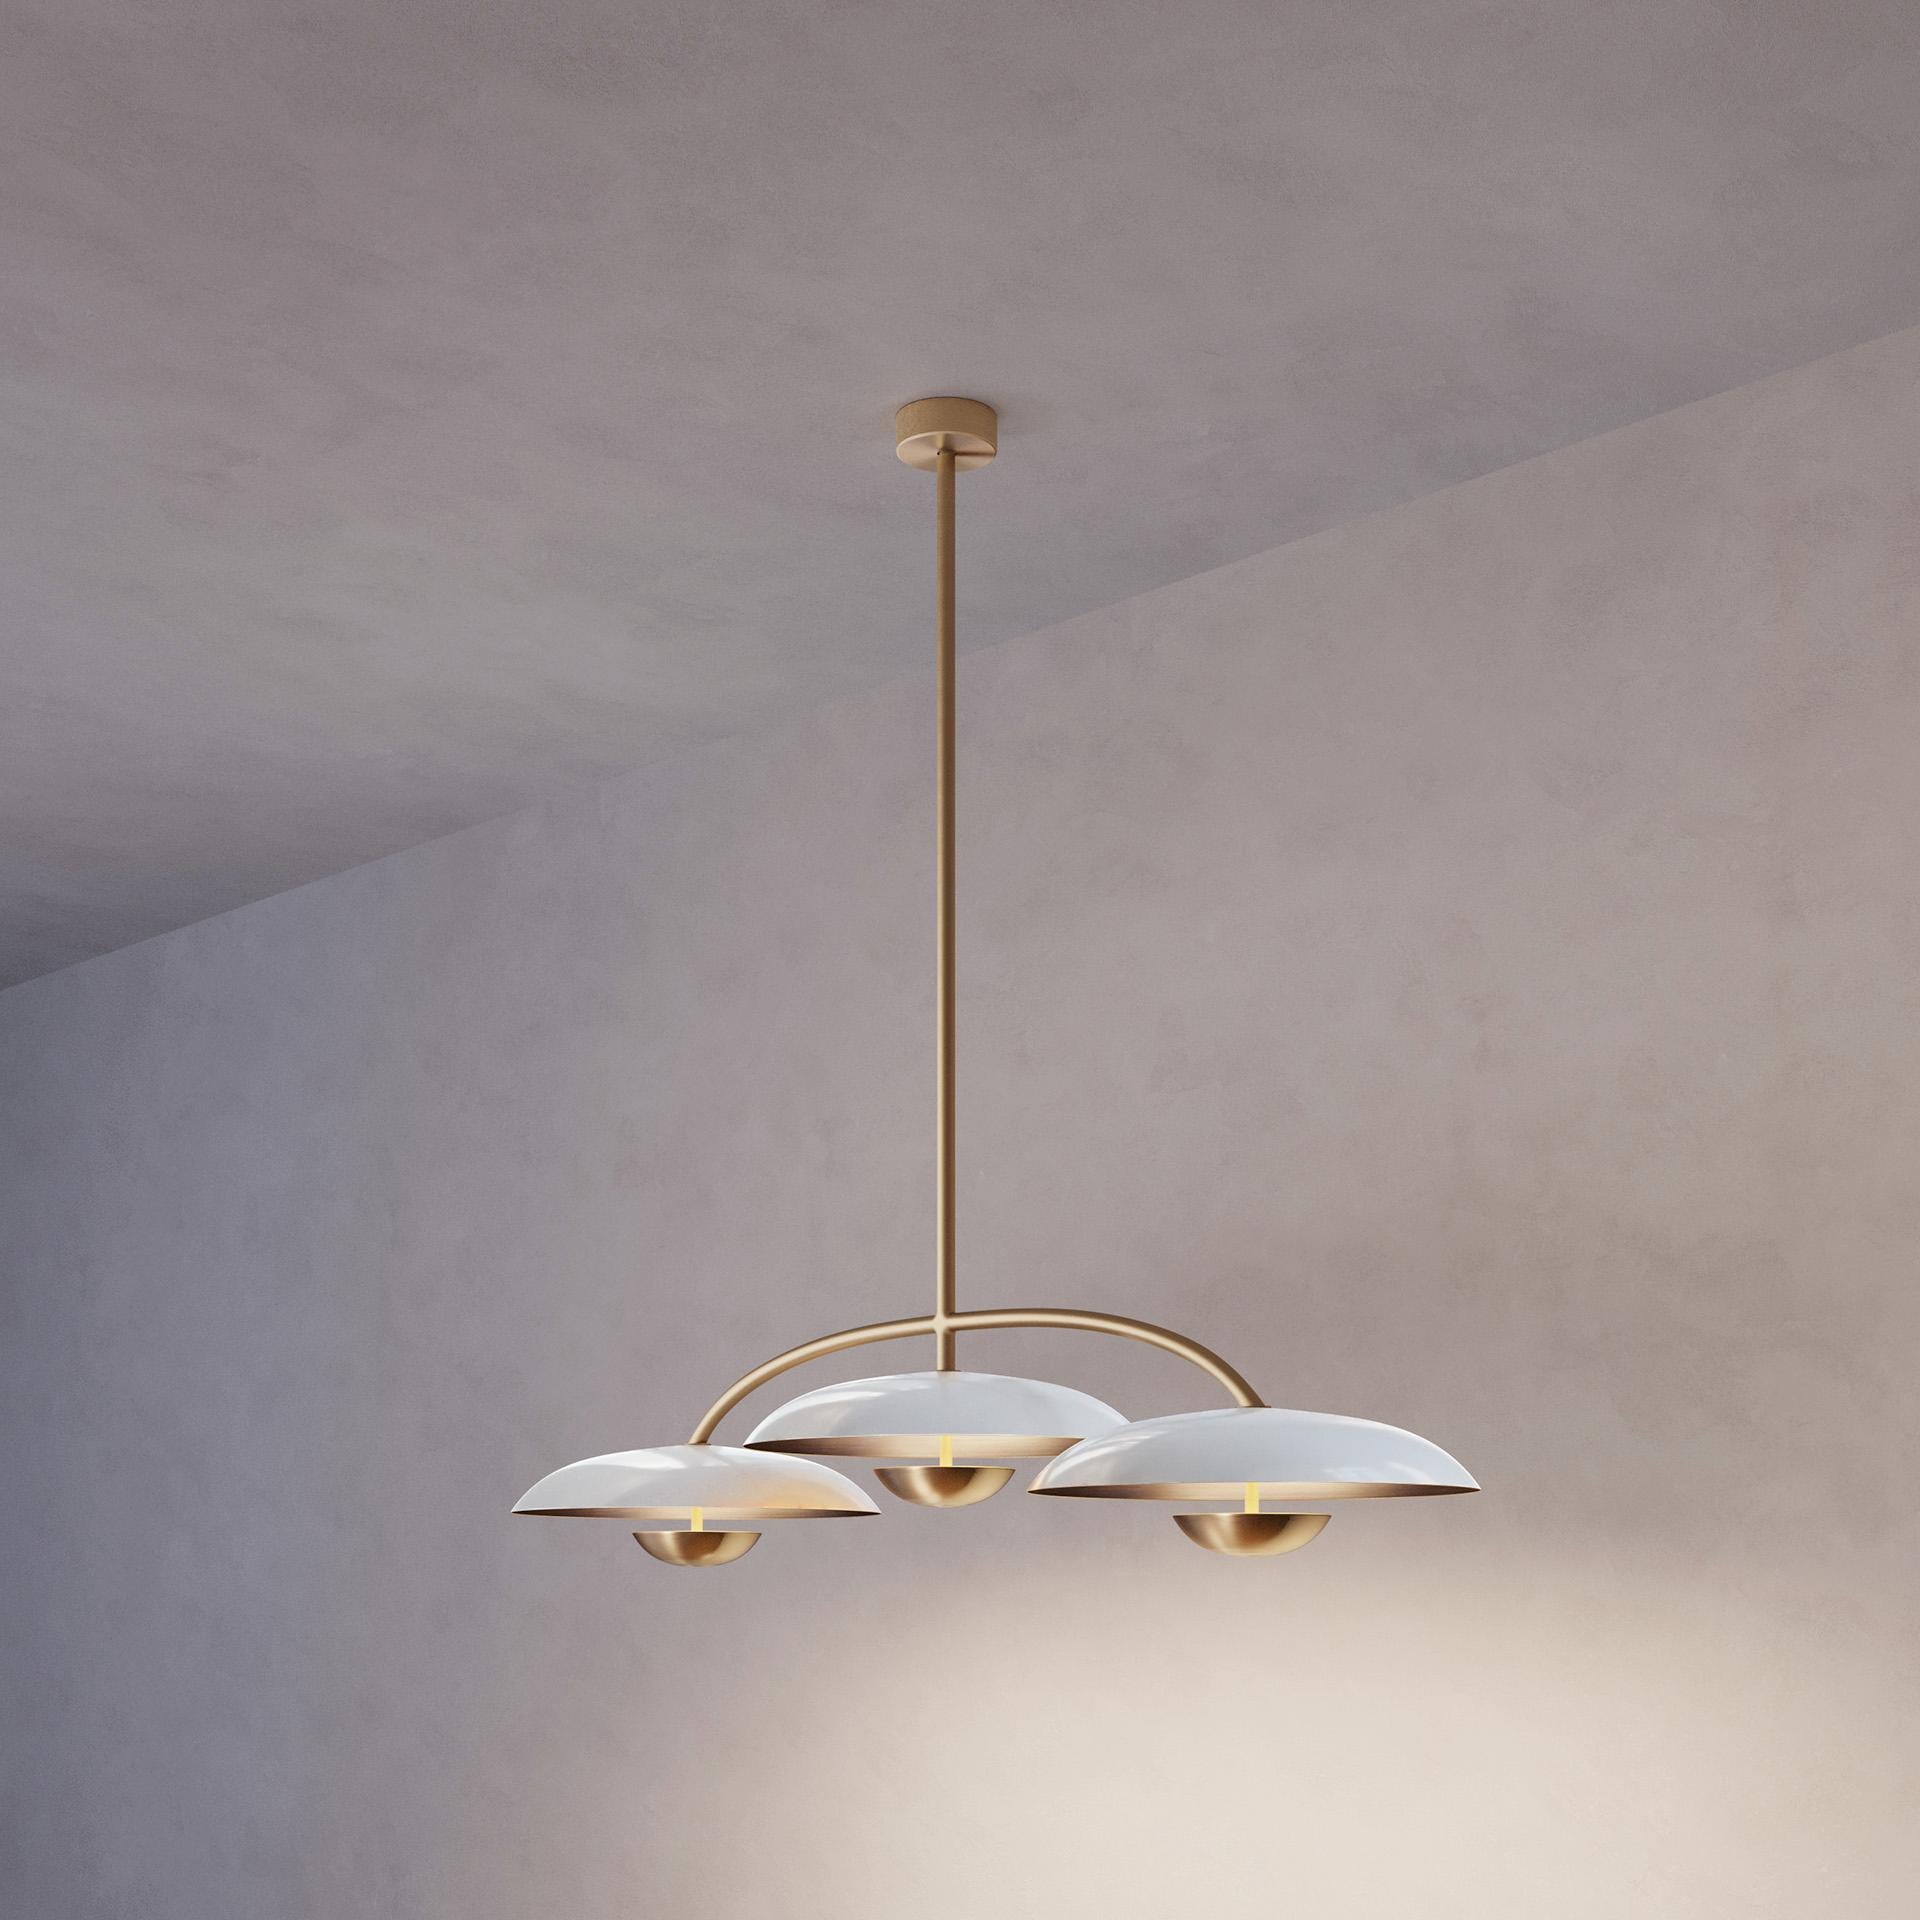 Contemporary Orbit Trio Purion Ceiling Light by Atelier001